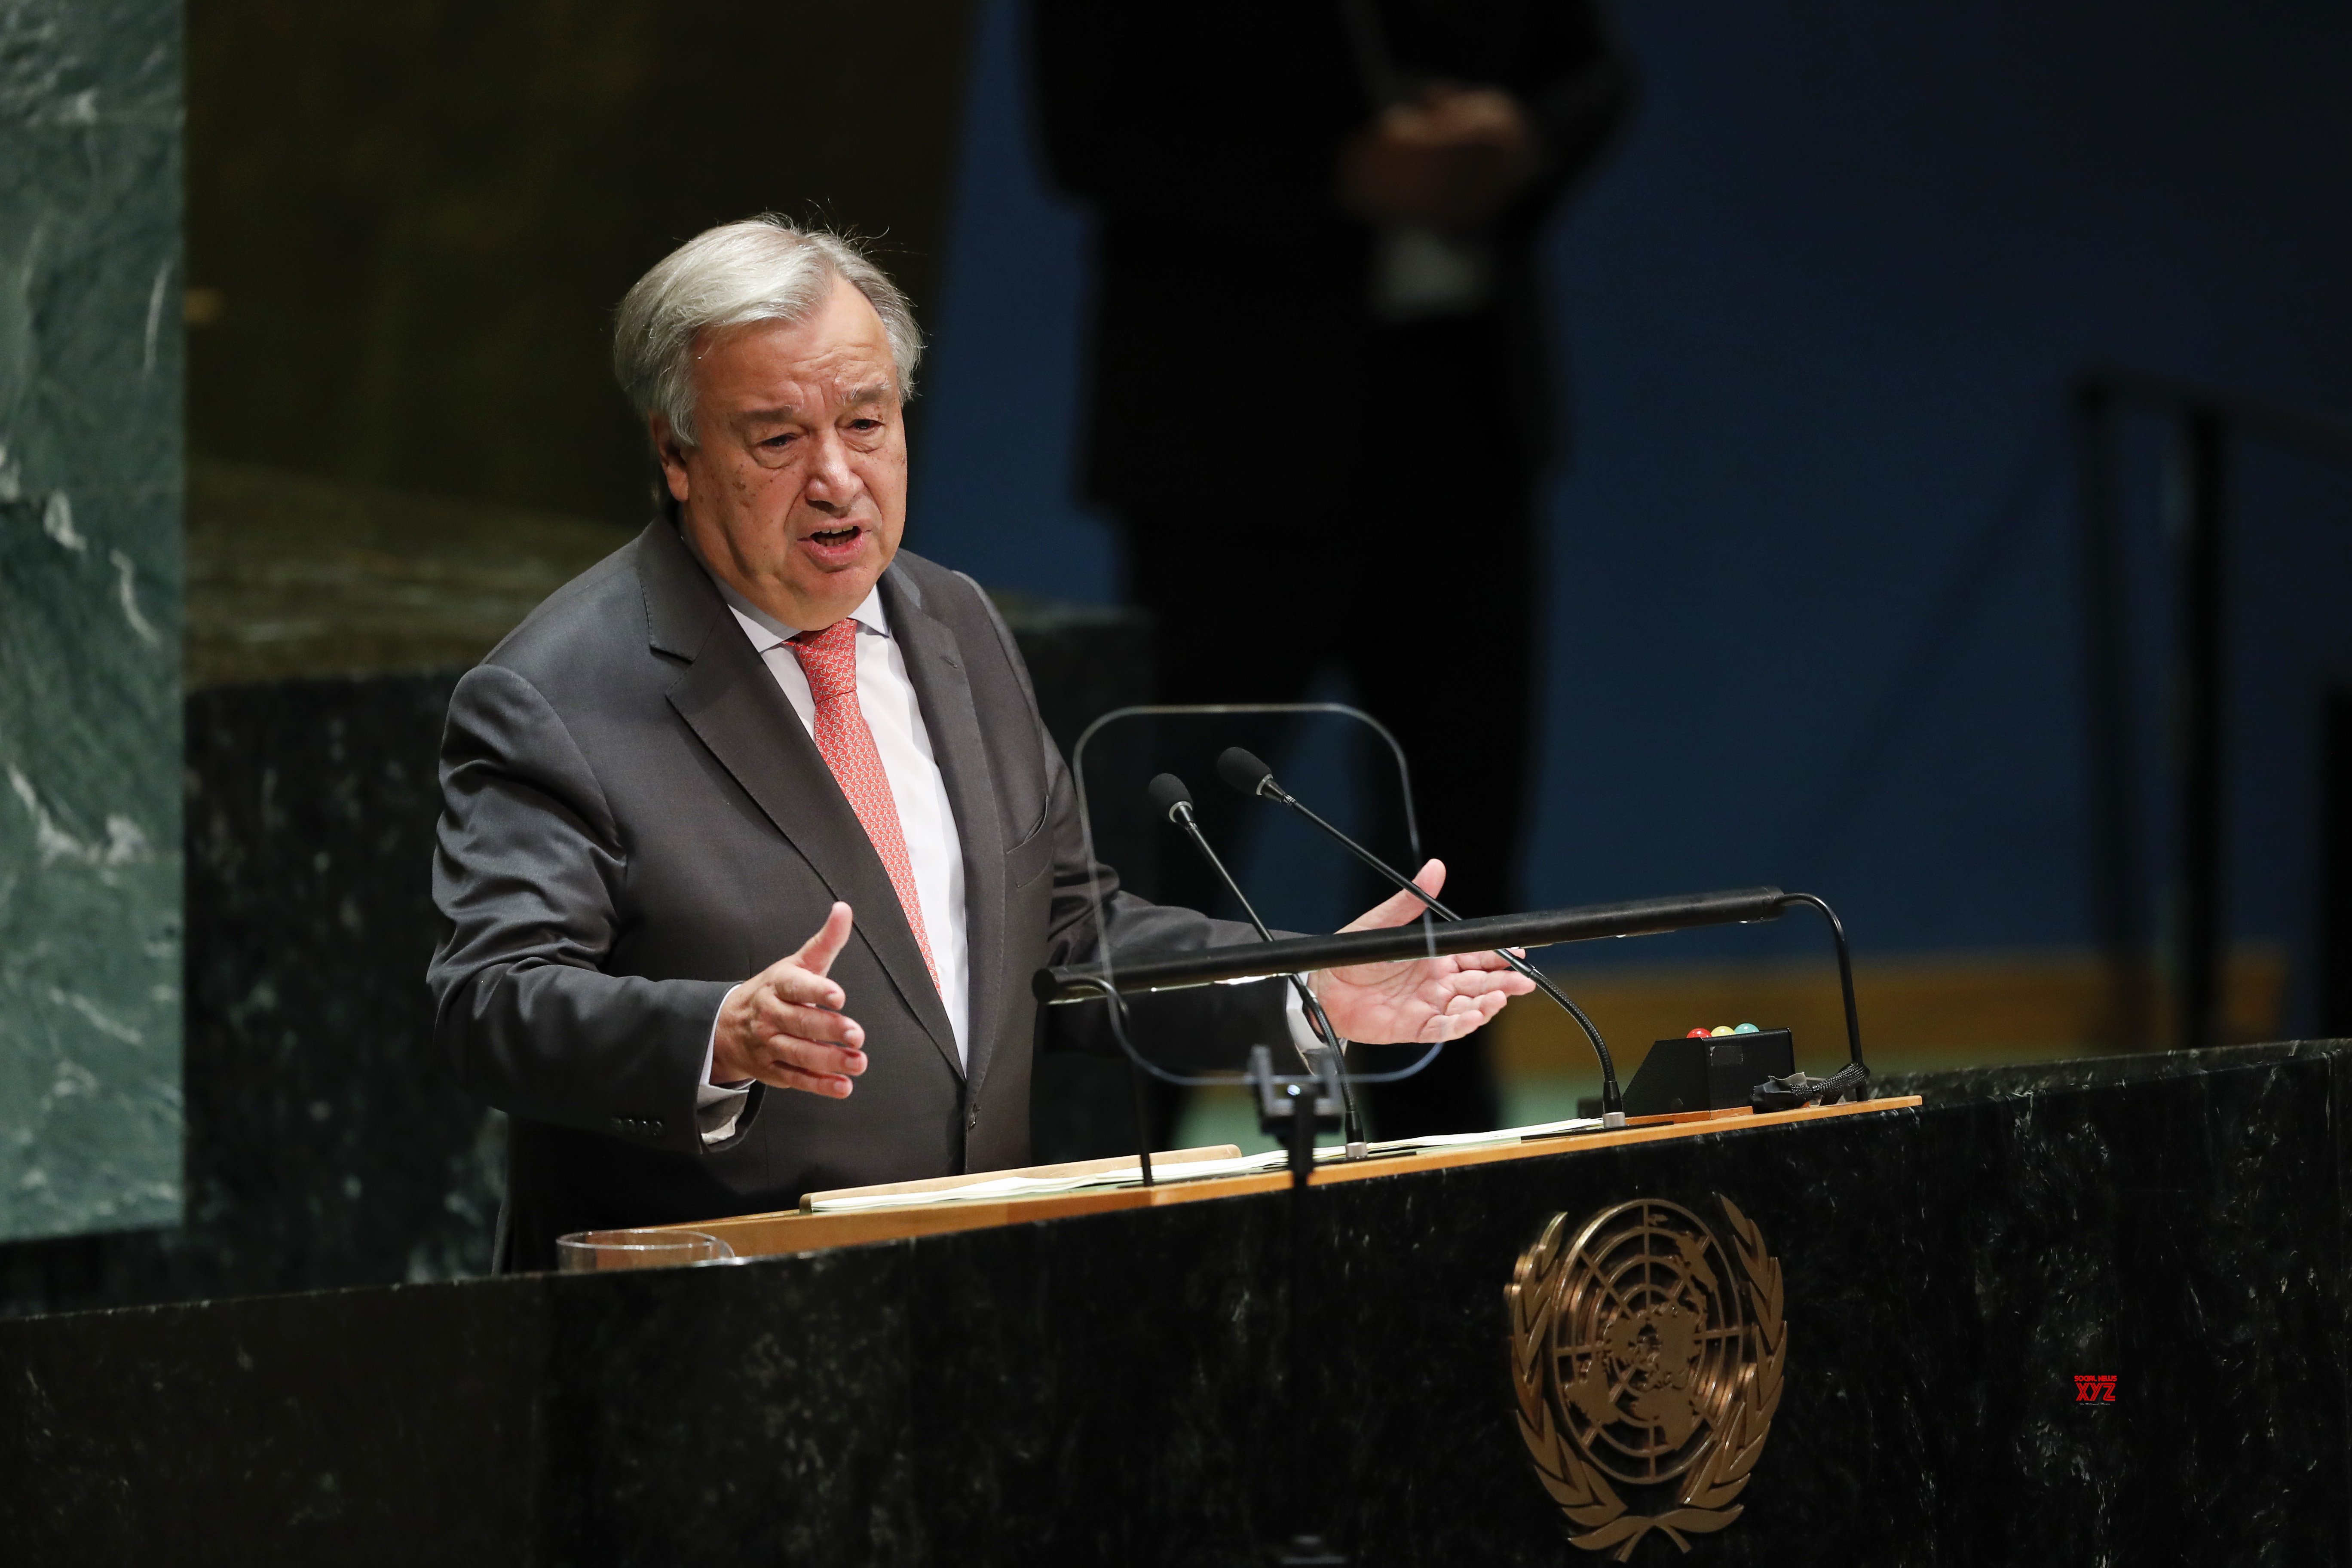 UN chief spotlights partnership to fight terrorism